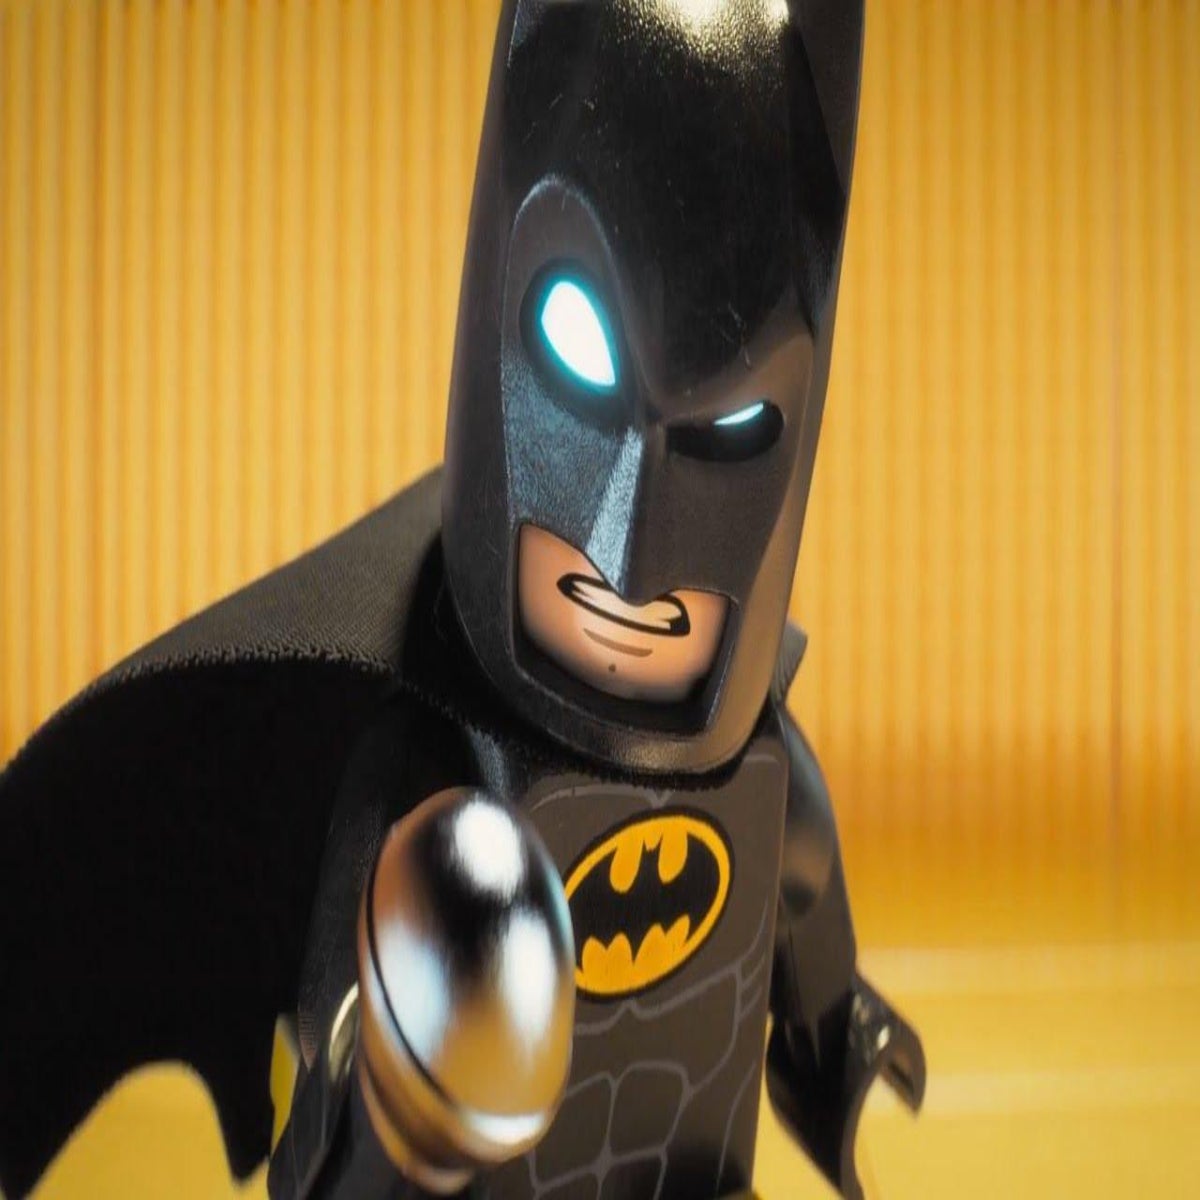 The LEGO Batman Movie - LEGO Batman has some super friends